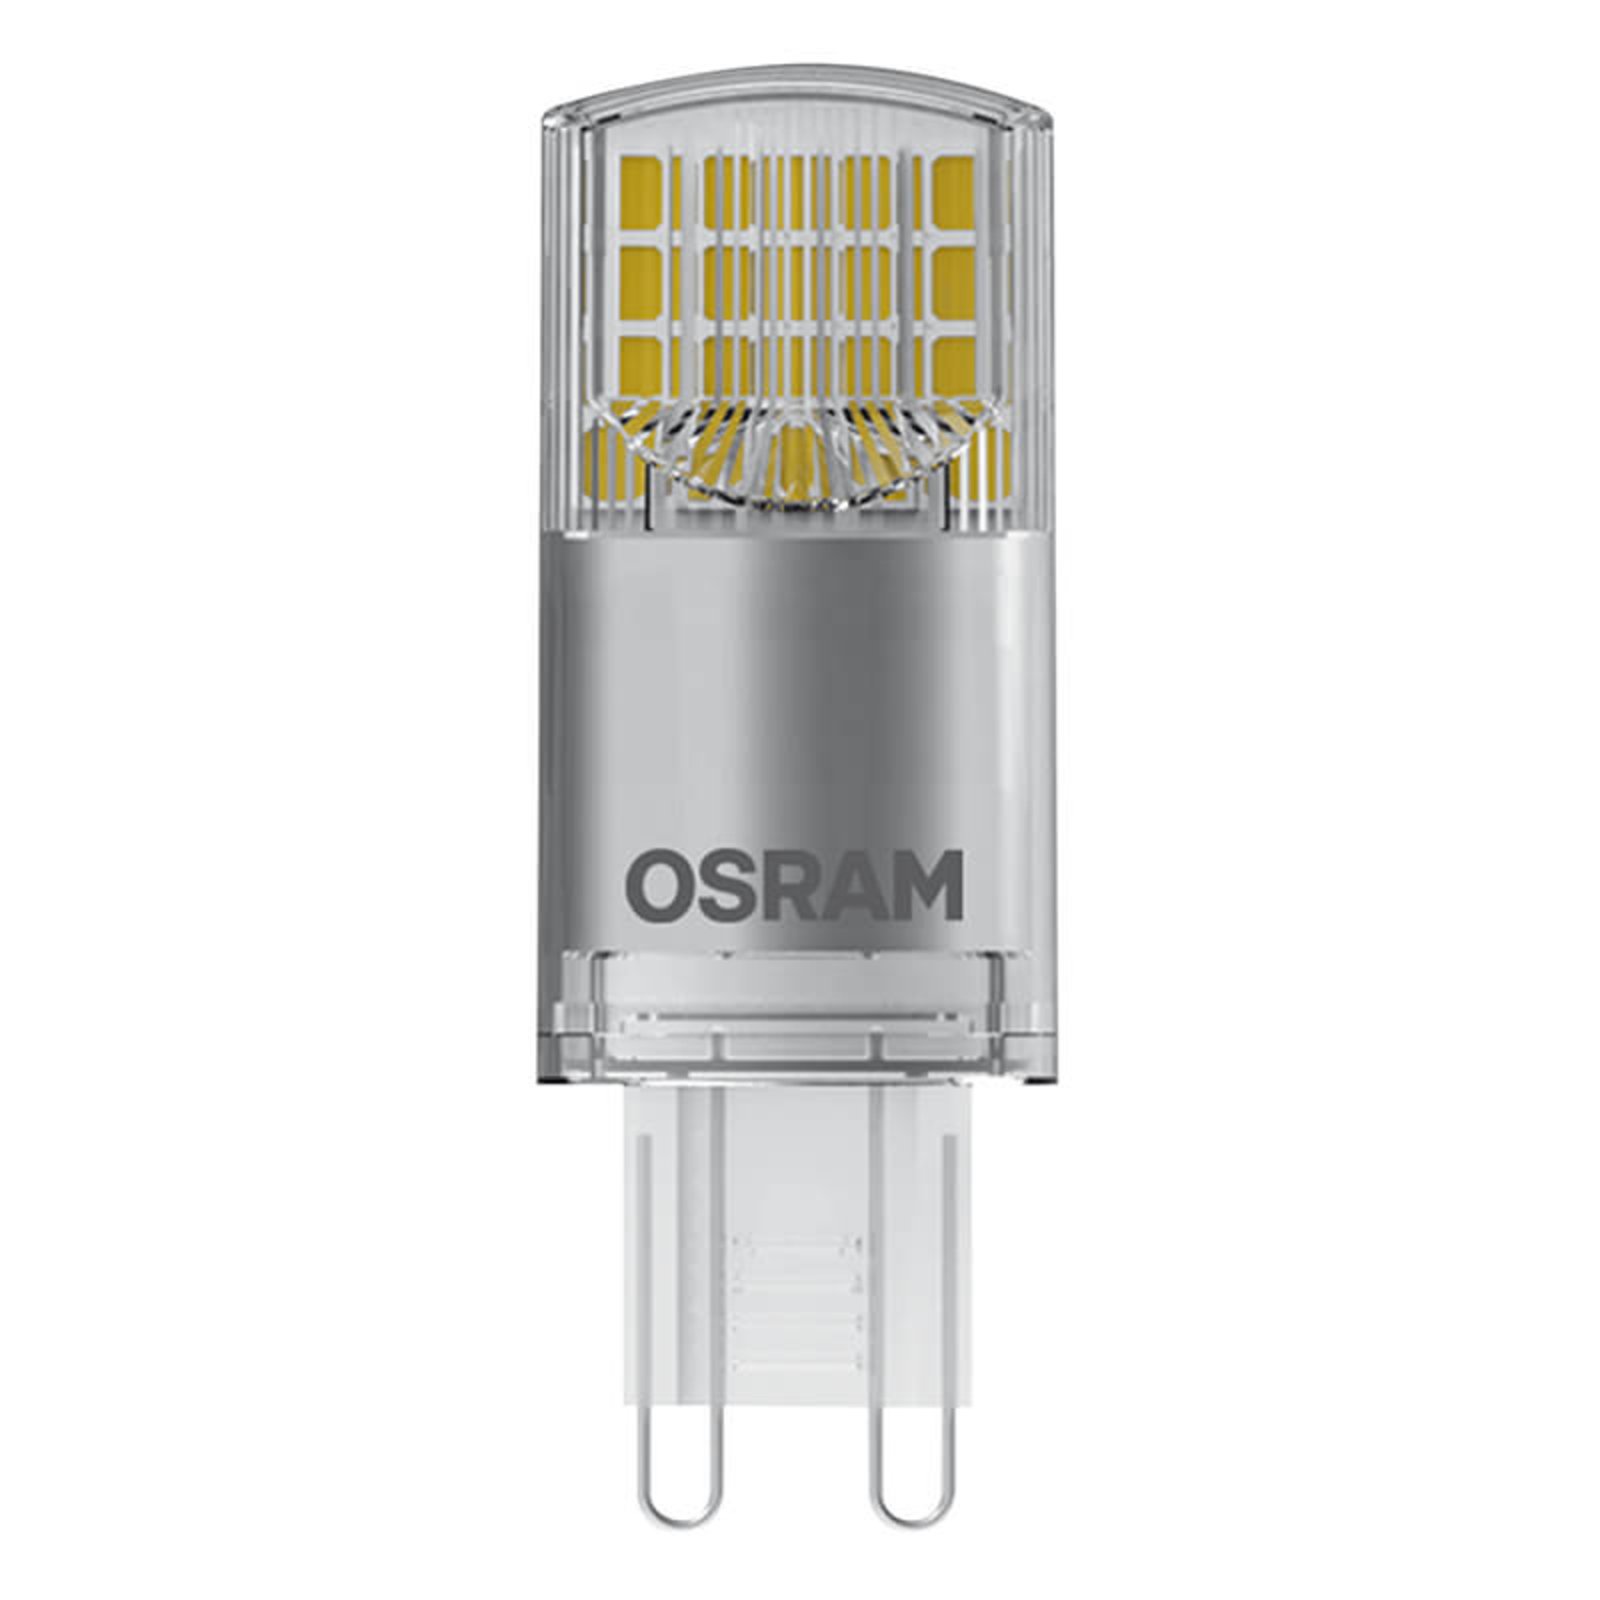 OSRAM LED stiftlamp G9 3,8W, warmwit, 470 lm